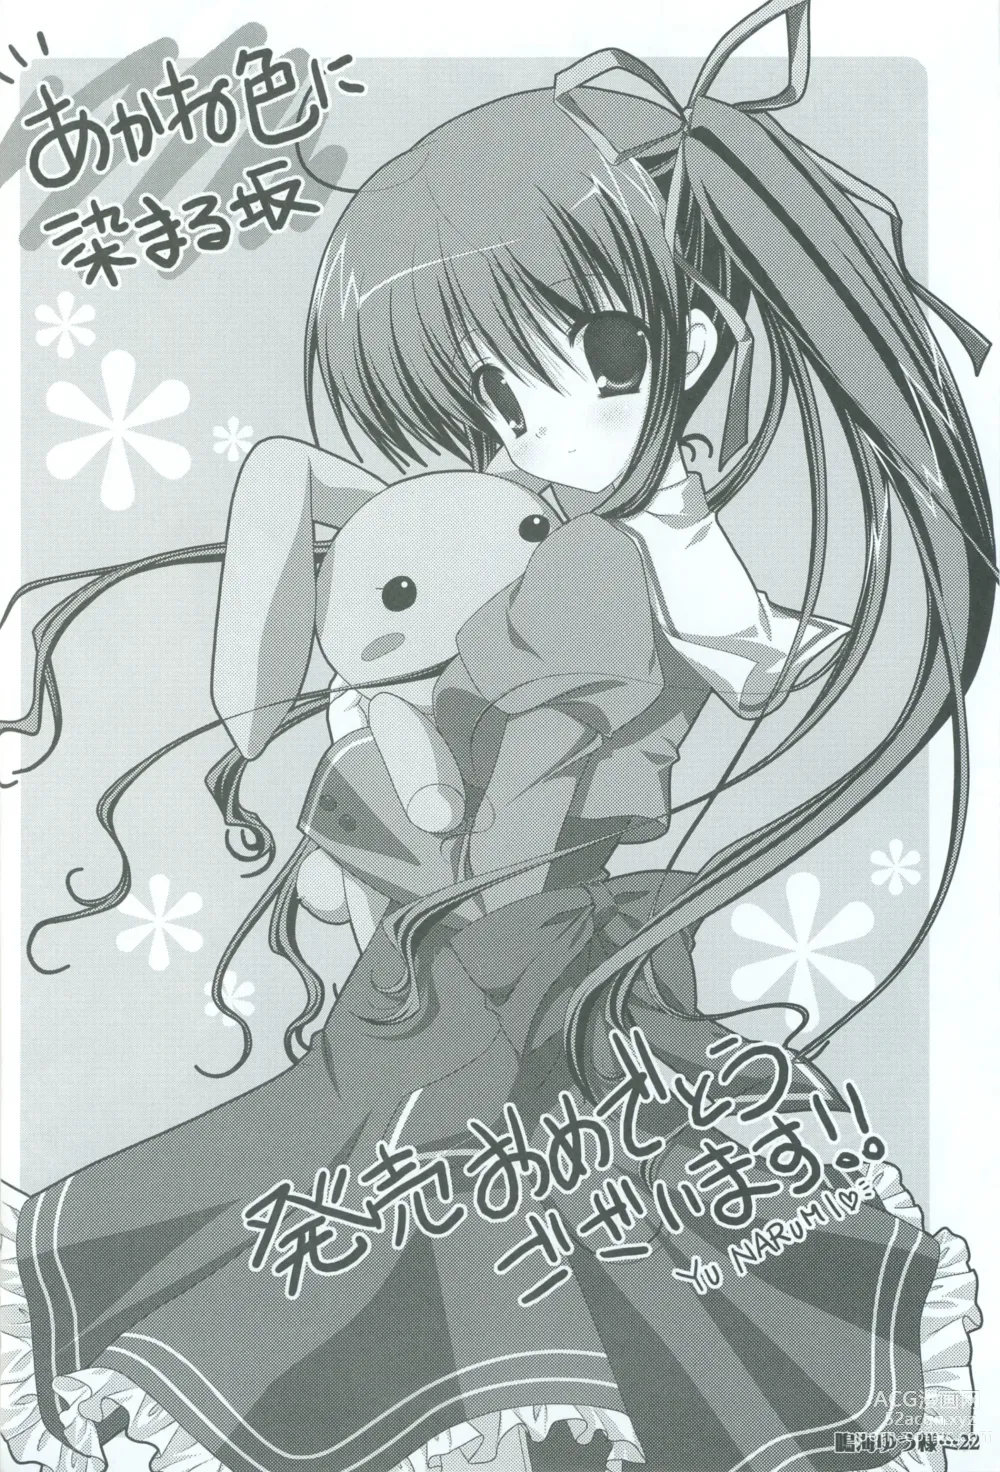 Page 23 of manga Akaneiro ni Somaru Saka SPECIAL GUESTS ILLUSTRATIONS